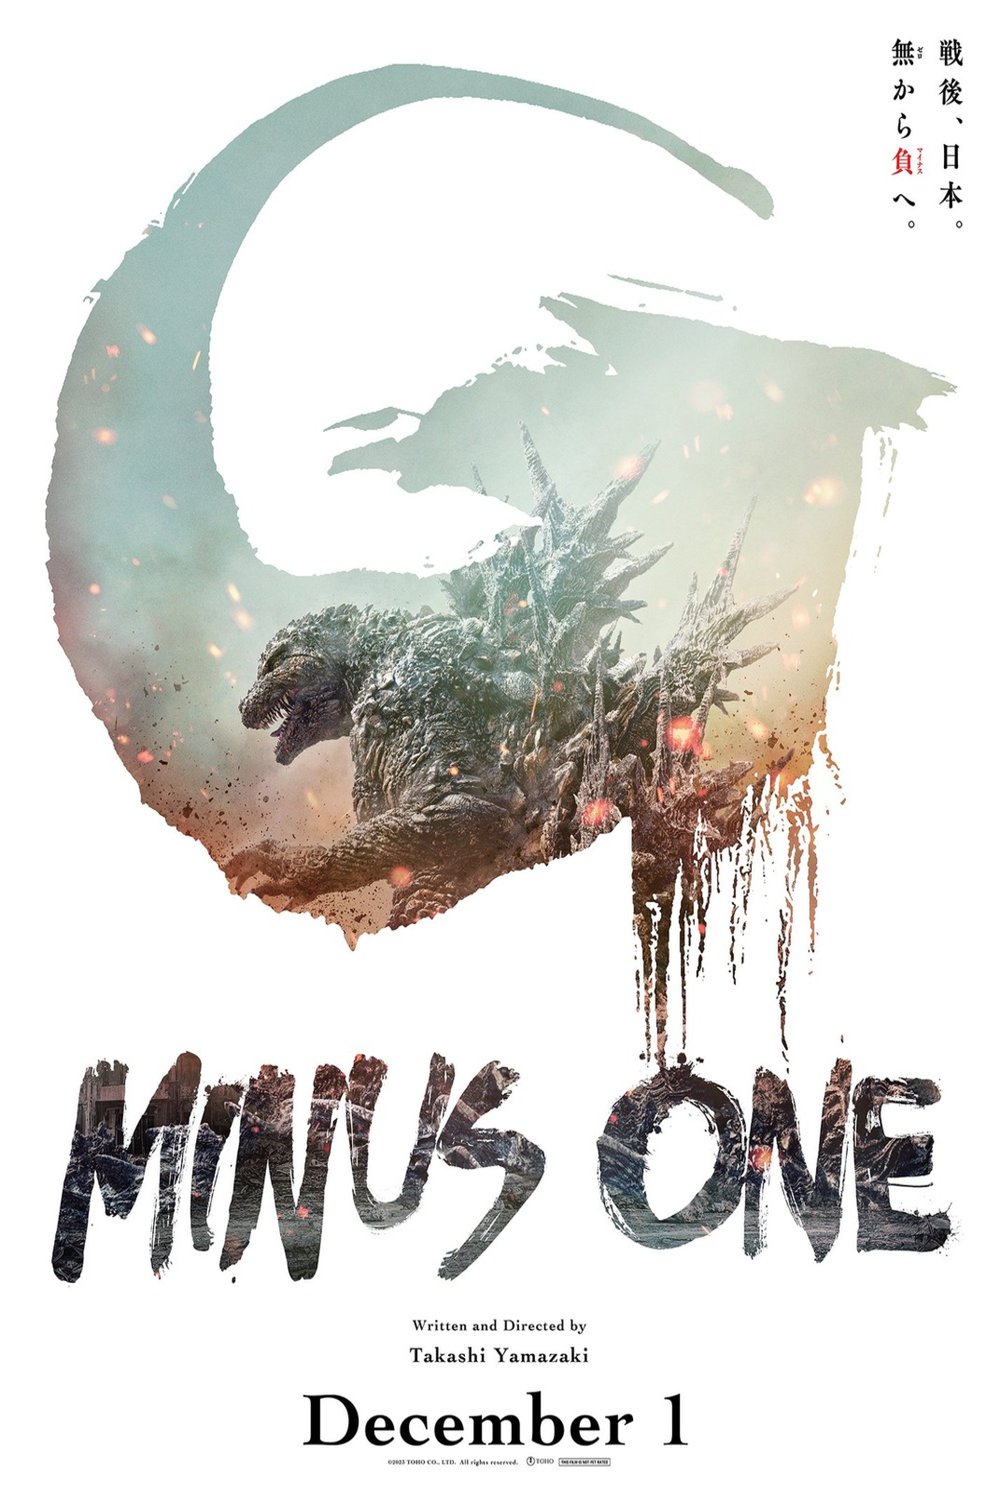 Poster of the movie Godzilla Minus One